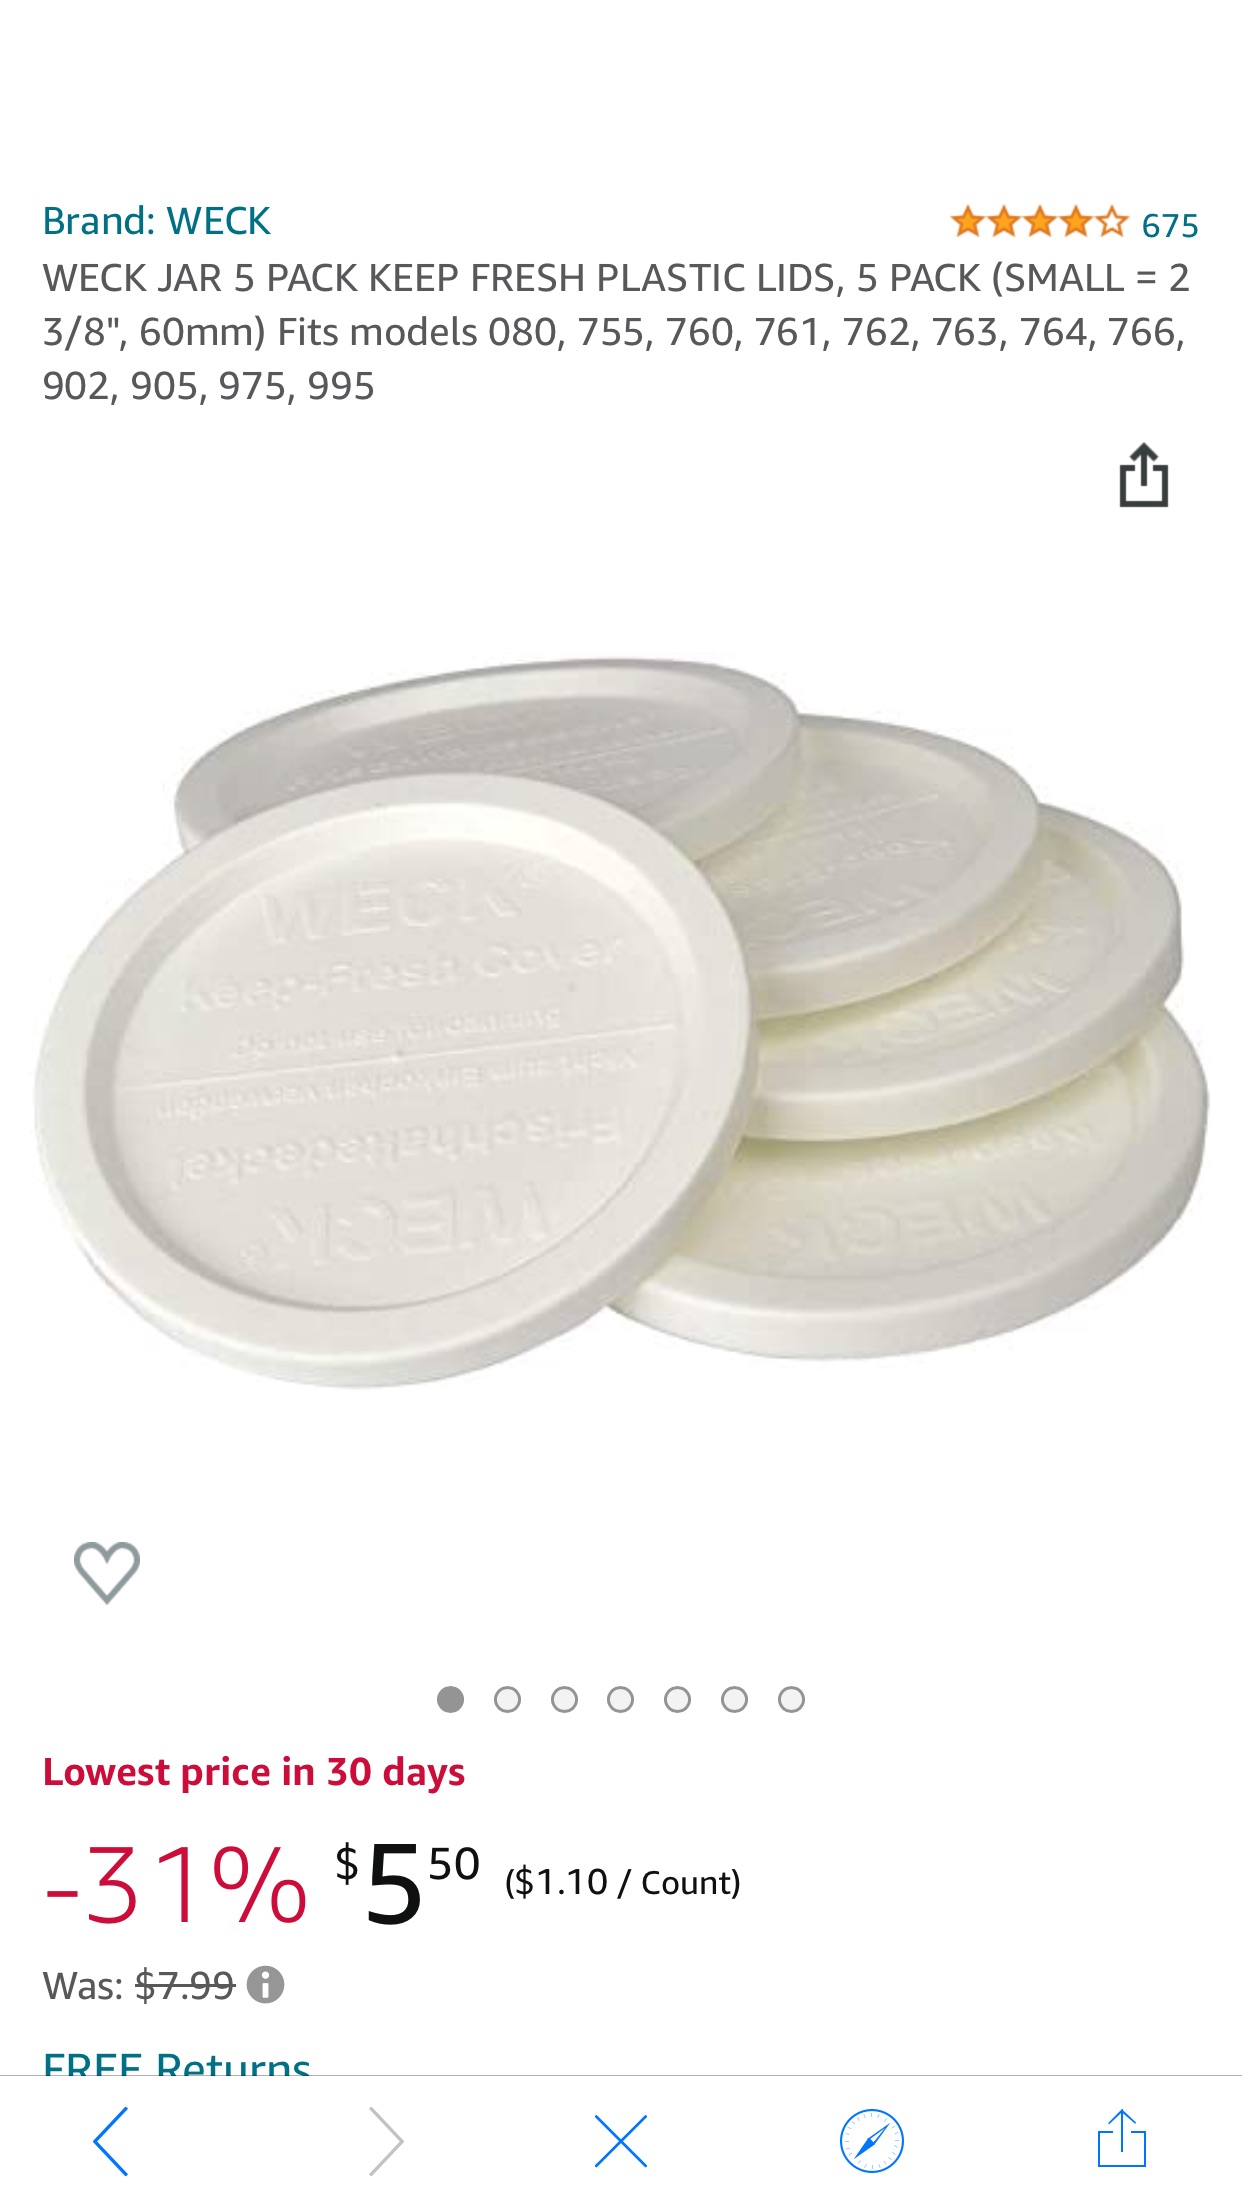 Amazon.com: WECK JAR 5 PACK KEEP FRESH PLASTIC LIDS, 5 PACK (SMALL = 2 3/8", 60mm) Fits models 080, 755, 760, 761, 762, 763, 764, 766, 902, 905, 975, 995 : Home & Kitchen